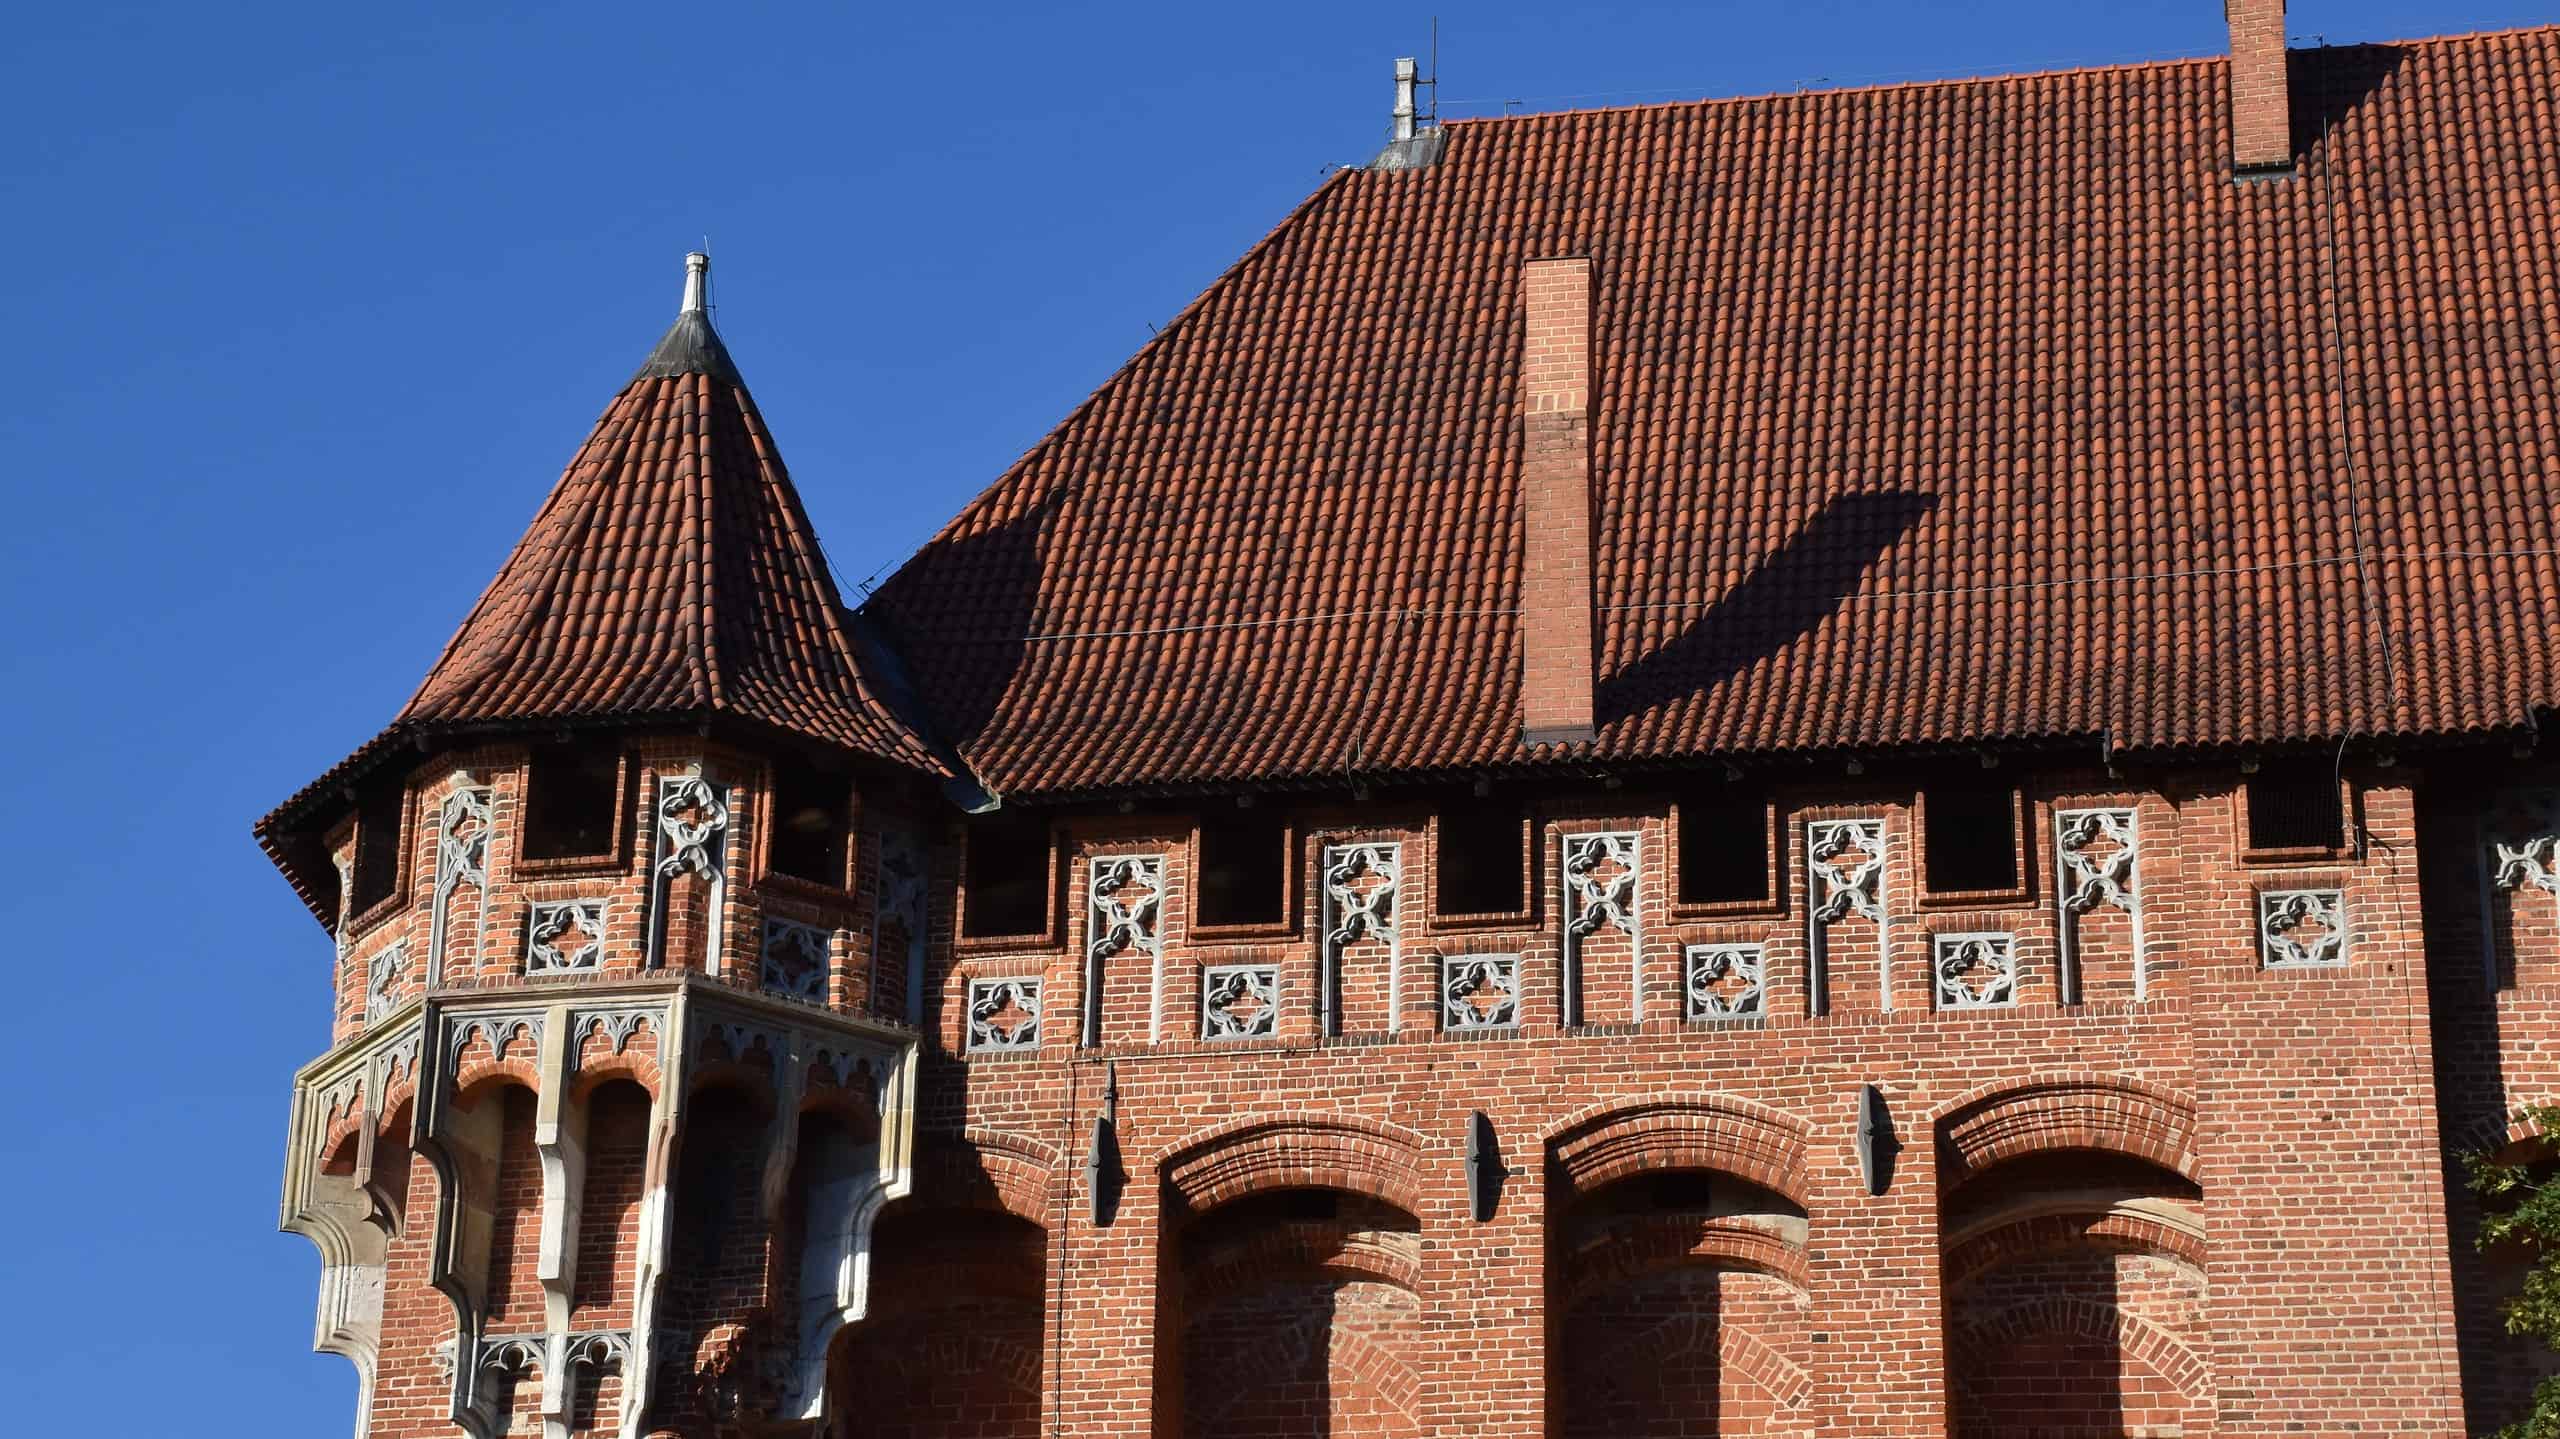 Brick buildings of Malbork Castle in Poland